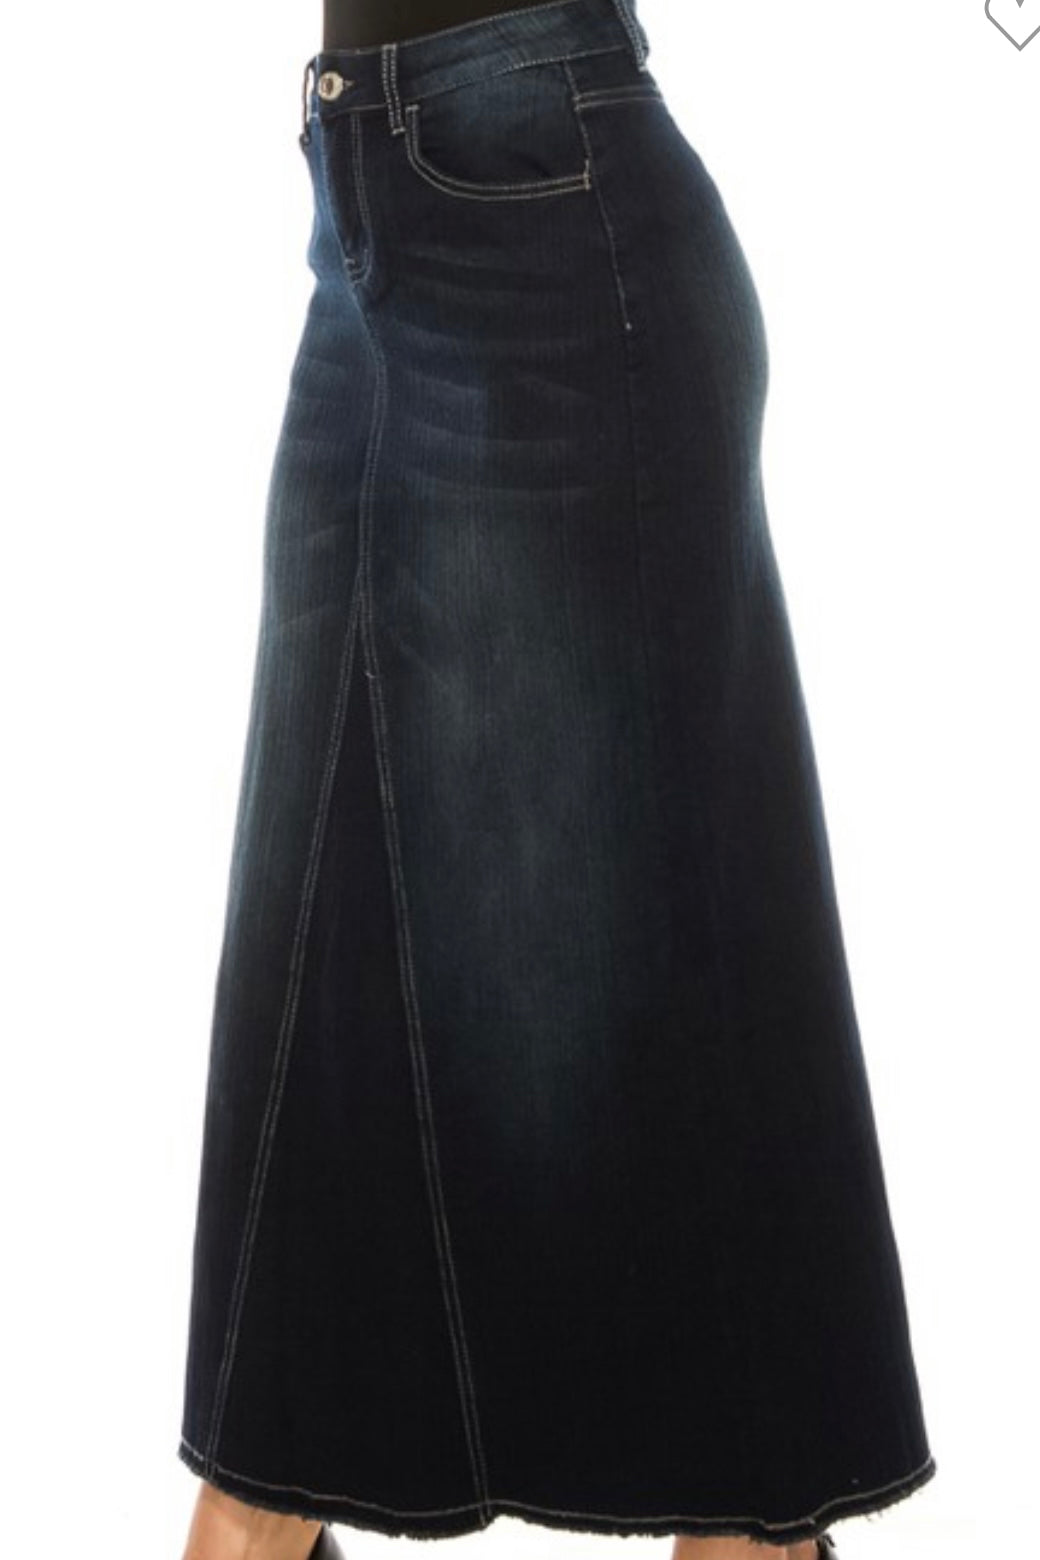 “Emery Claire” Long Dark Denim Skirt